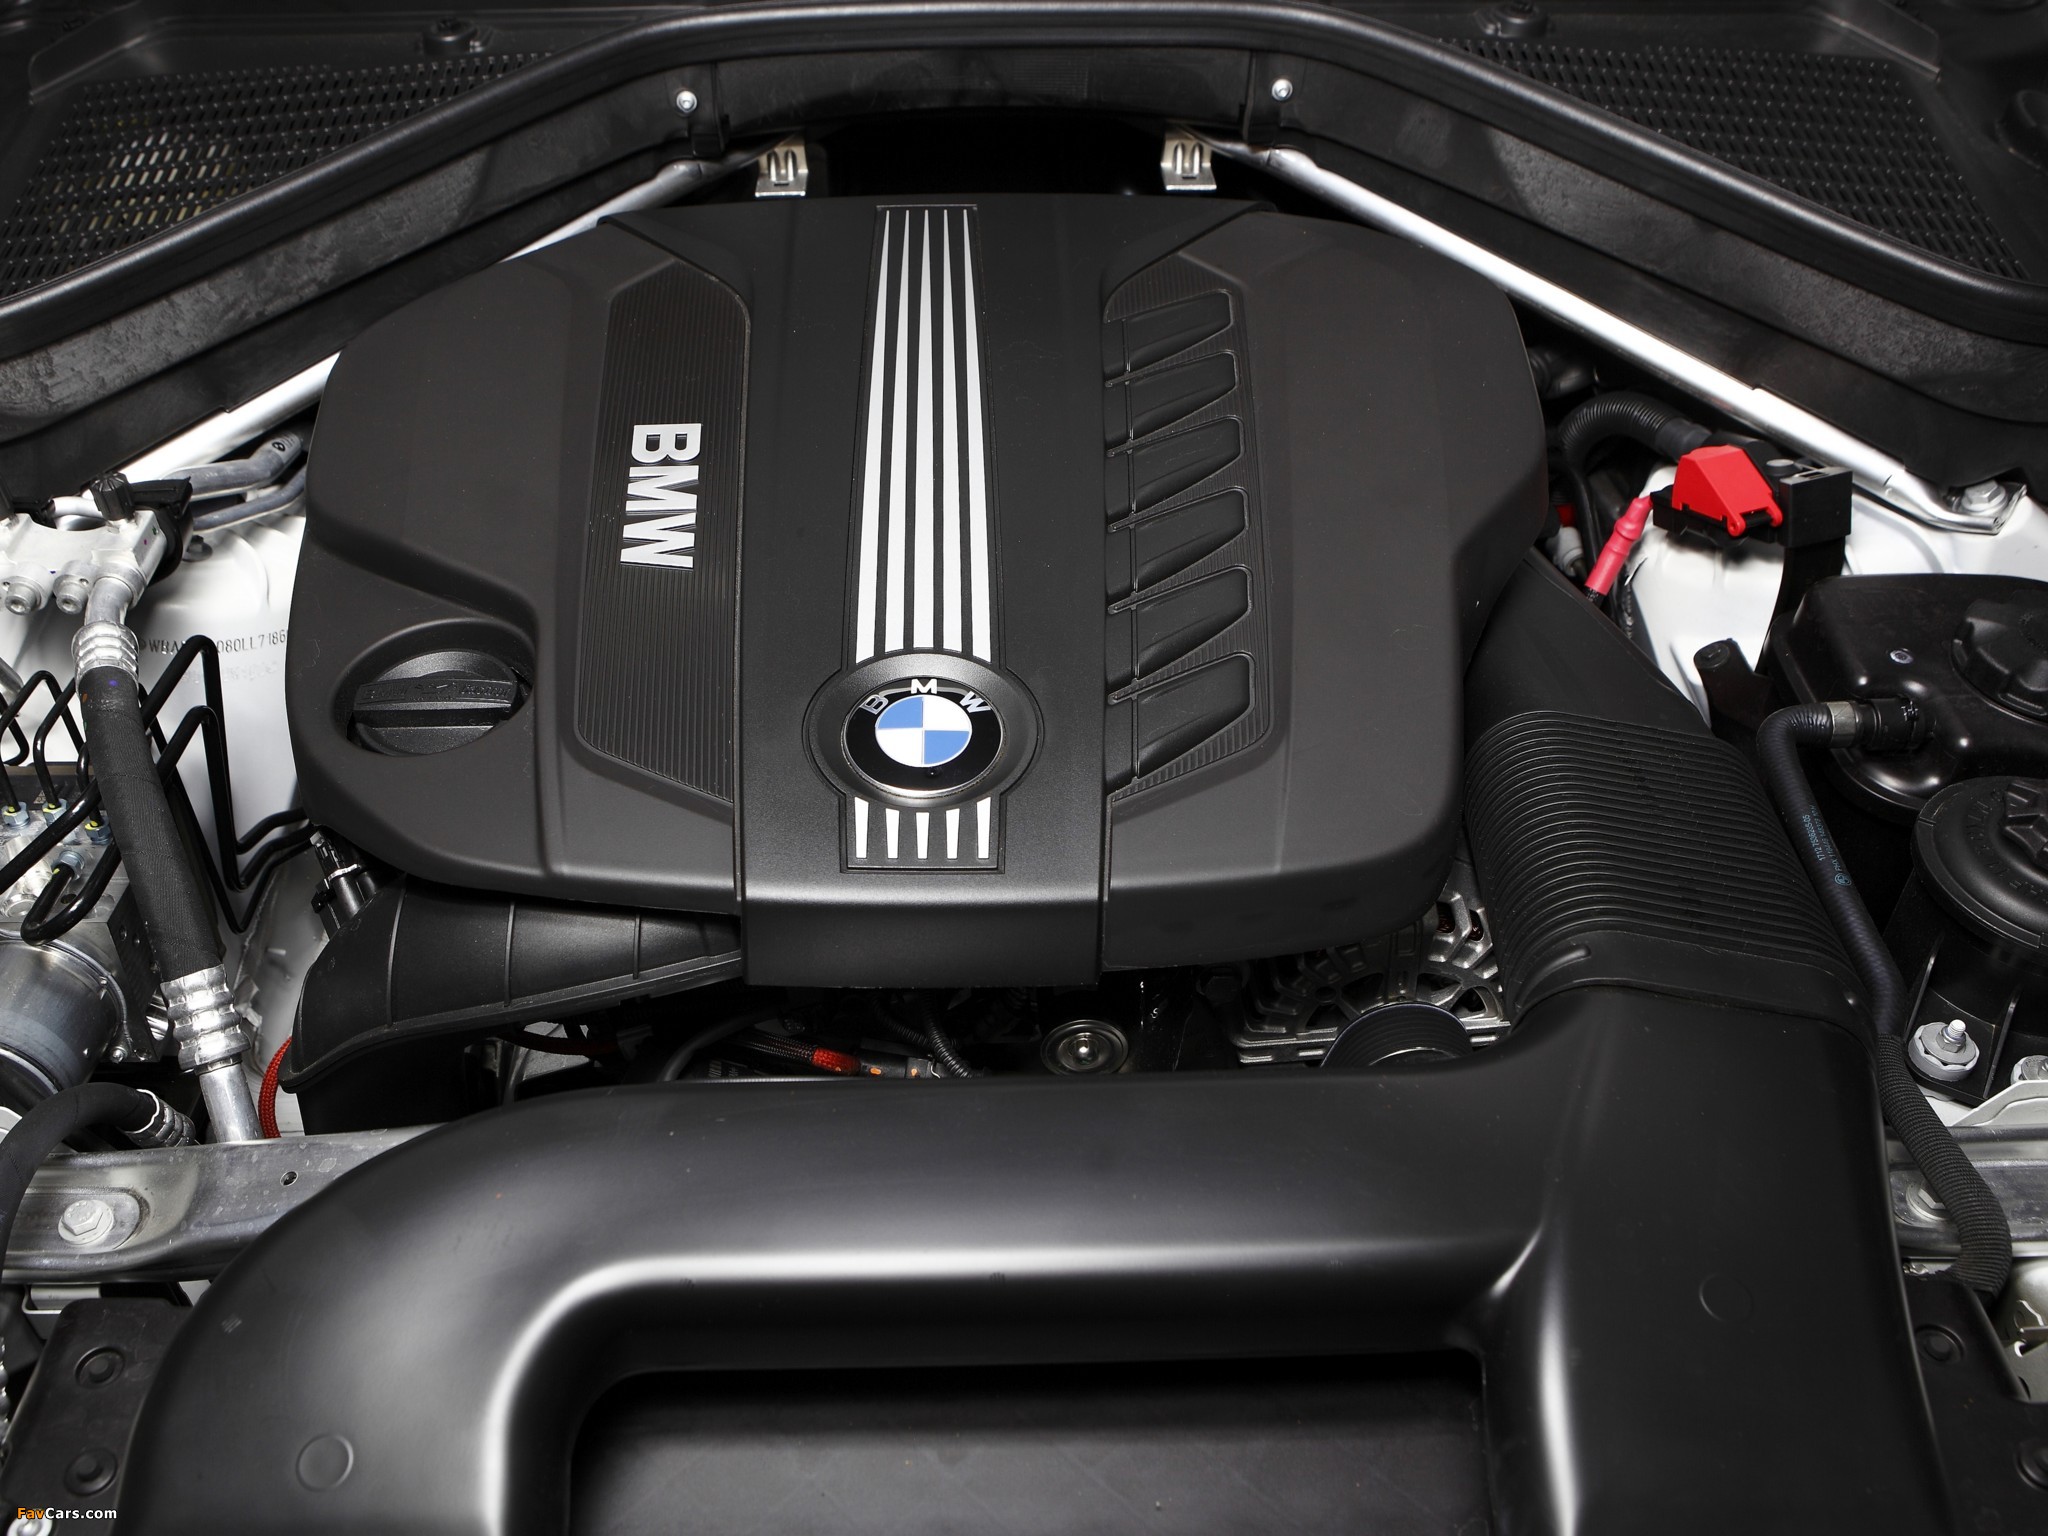 Bmw x6 двигатели. BMW x6 e71 под капотом. BMW x6 f16 мотор. Мотор BMW x6 40d. BMW x6 xdrive30d двигатель.